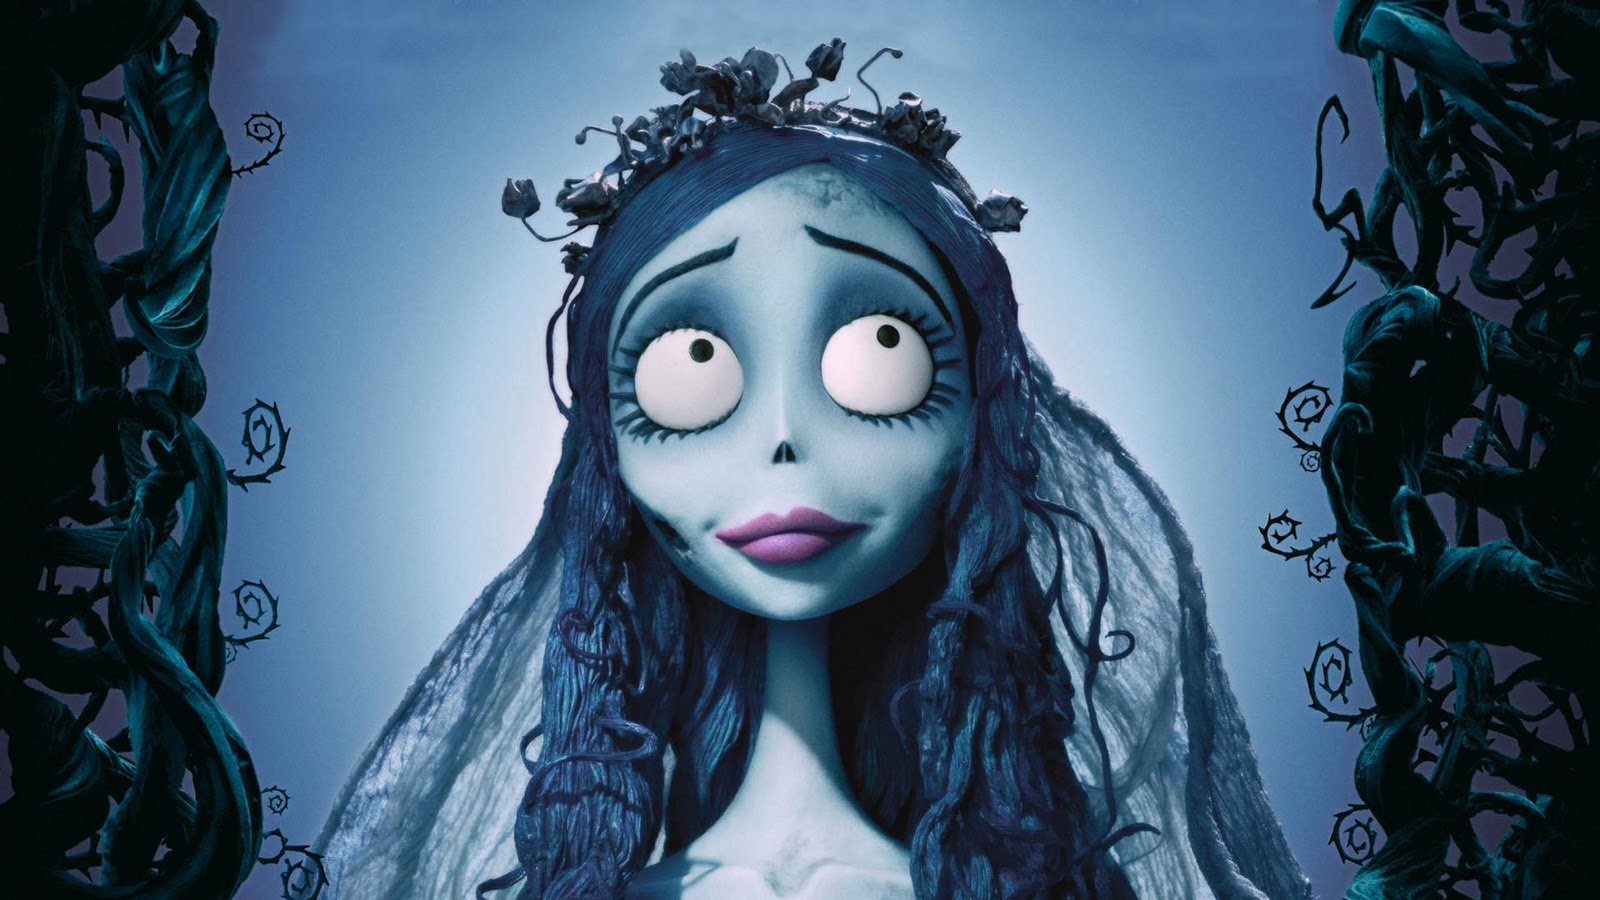 Corpse Bride - Movies Like Addams Family